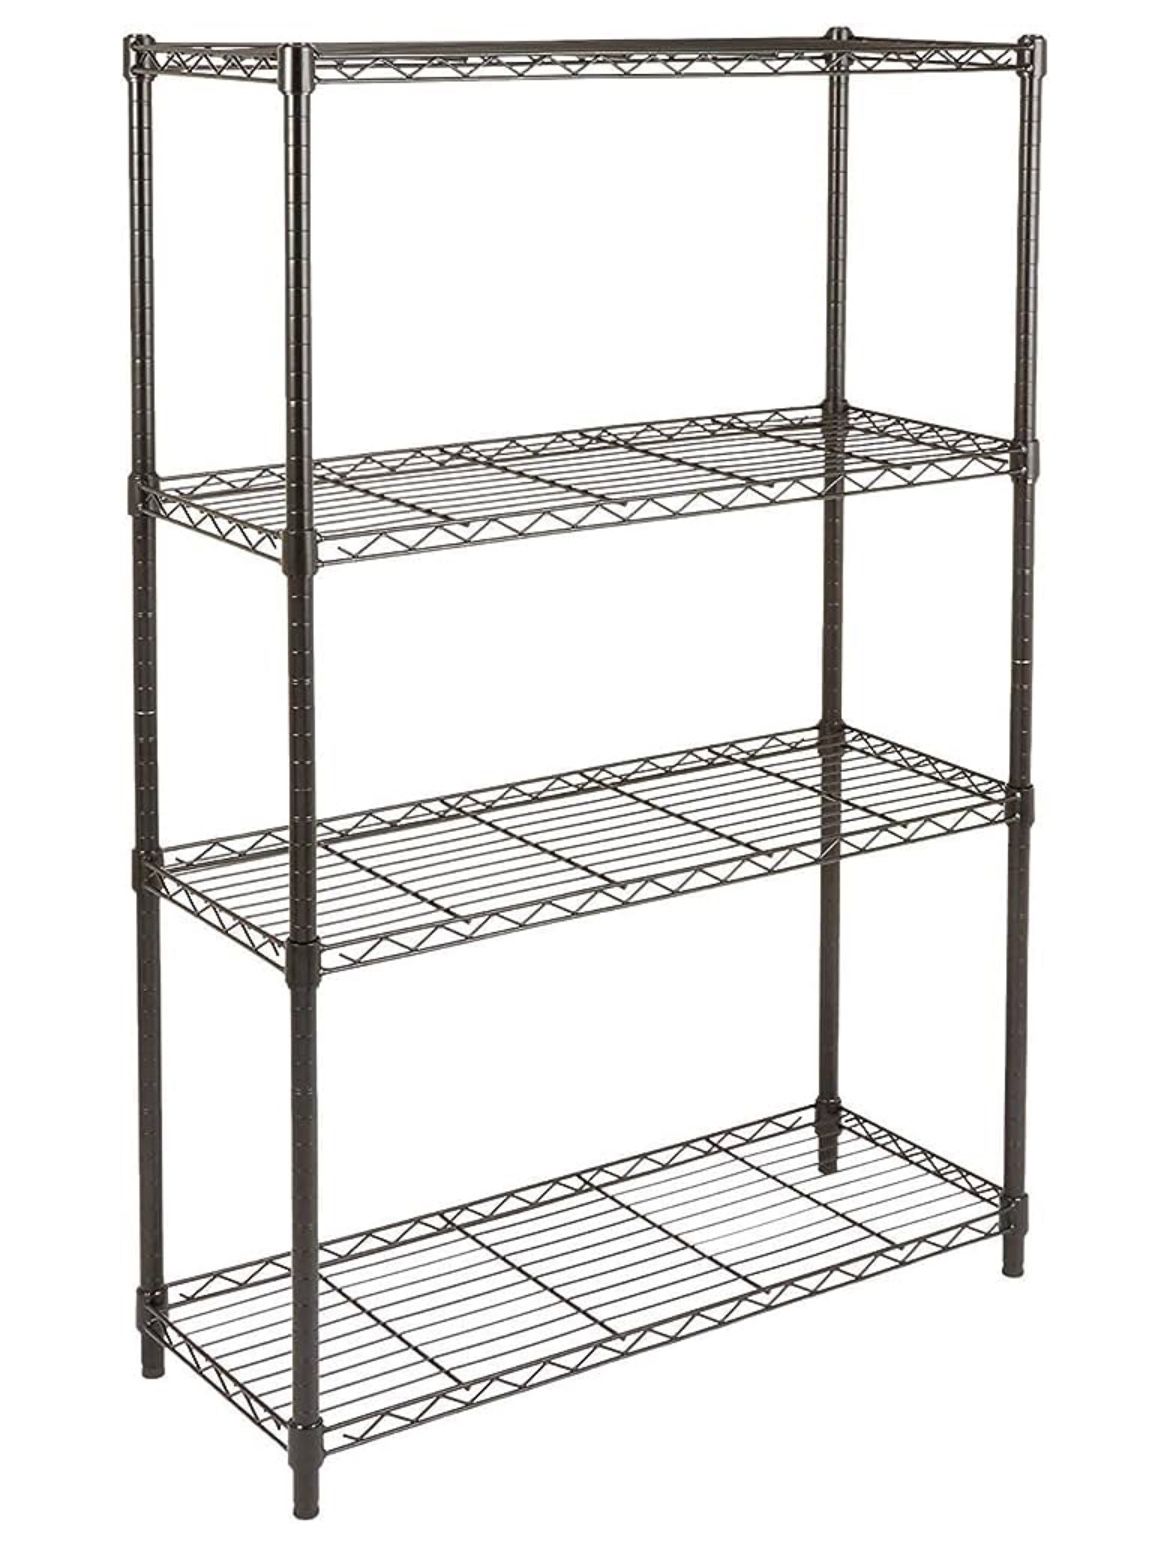 Amazon Basics 4-Shelf Adjustable, Heavy Duty Wide Storage Shelving Unit (350 lbs loading capacity per shelf), Steel Organizer Wire Rack, 36" L x 14" W